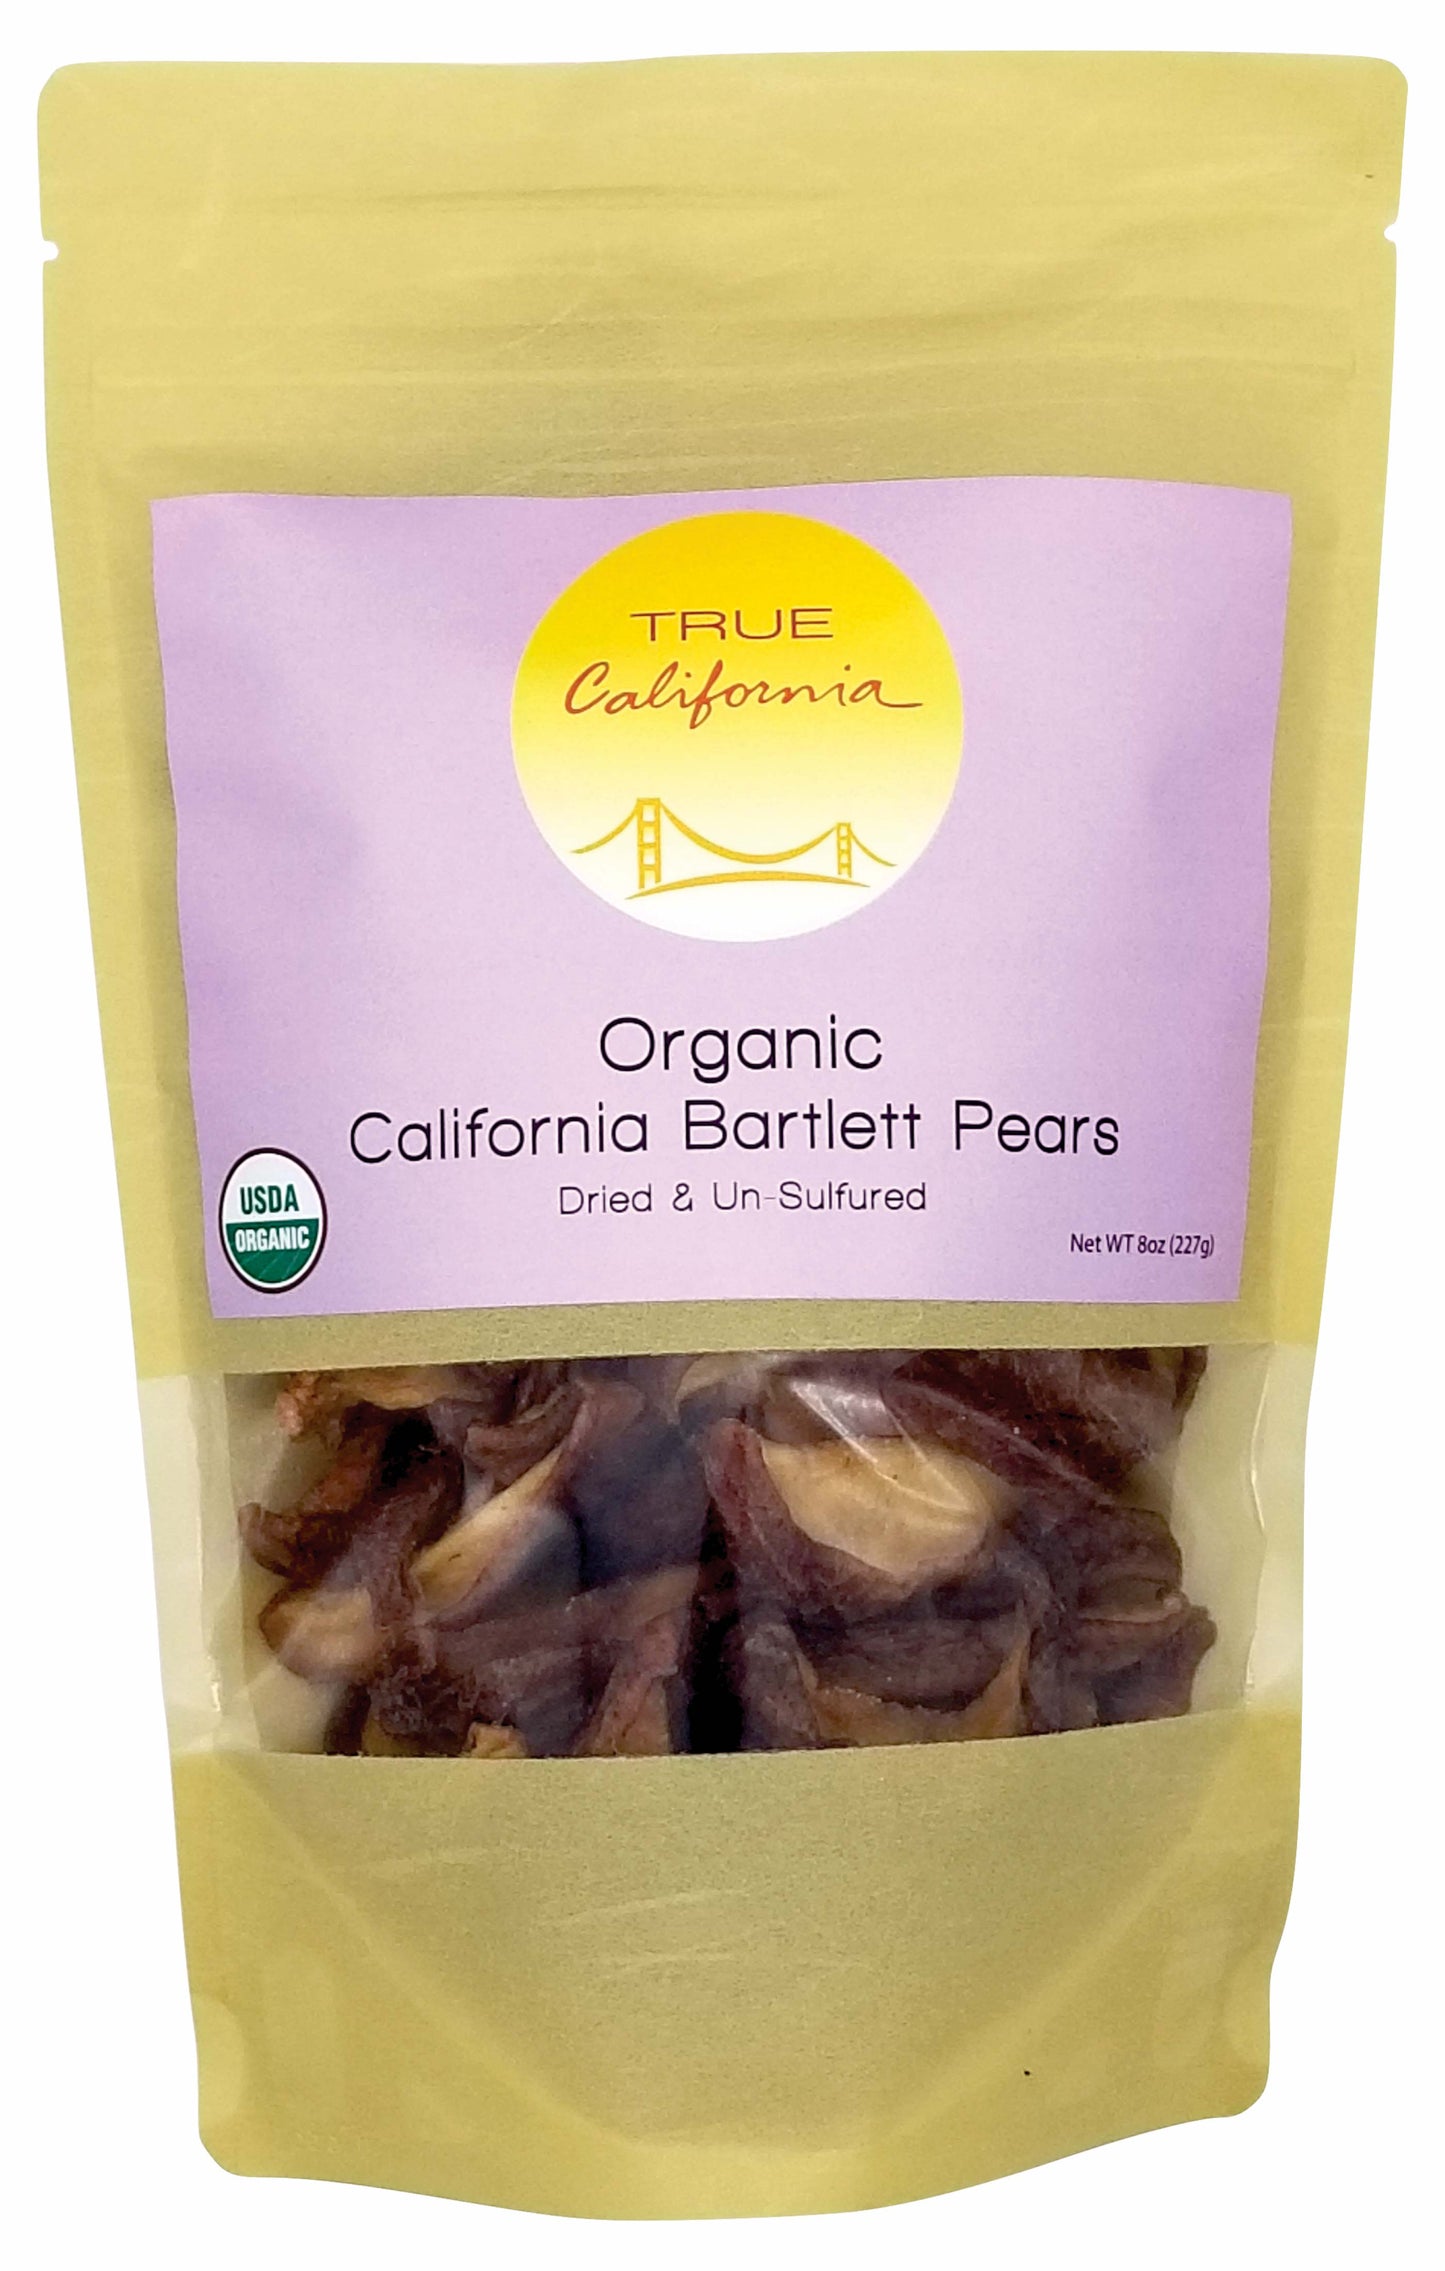 True California Organic Dried Bartlett Pears in an 8oz package